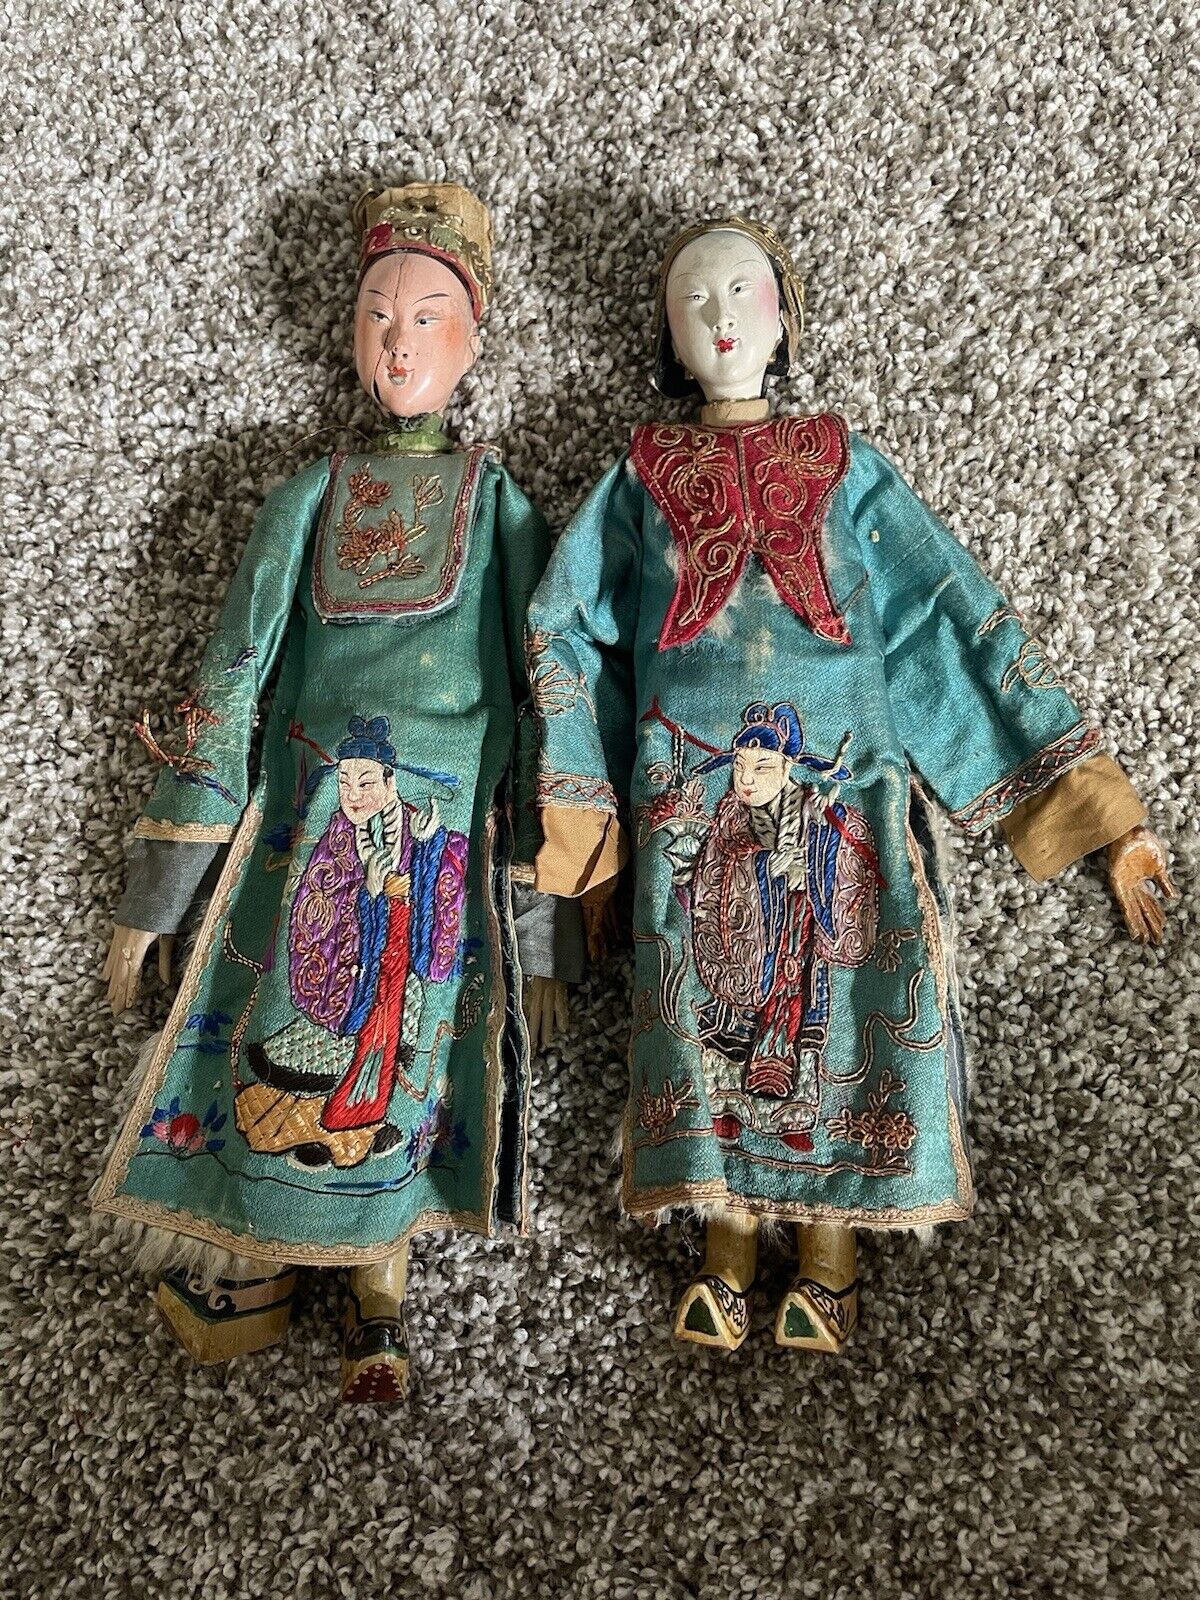 Antique Chinese Opera House Dolls